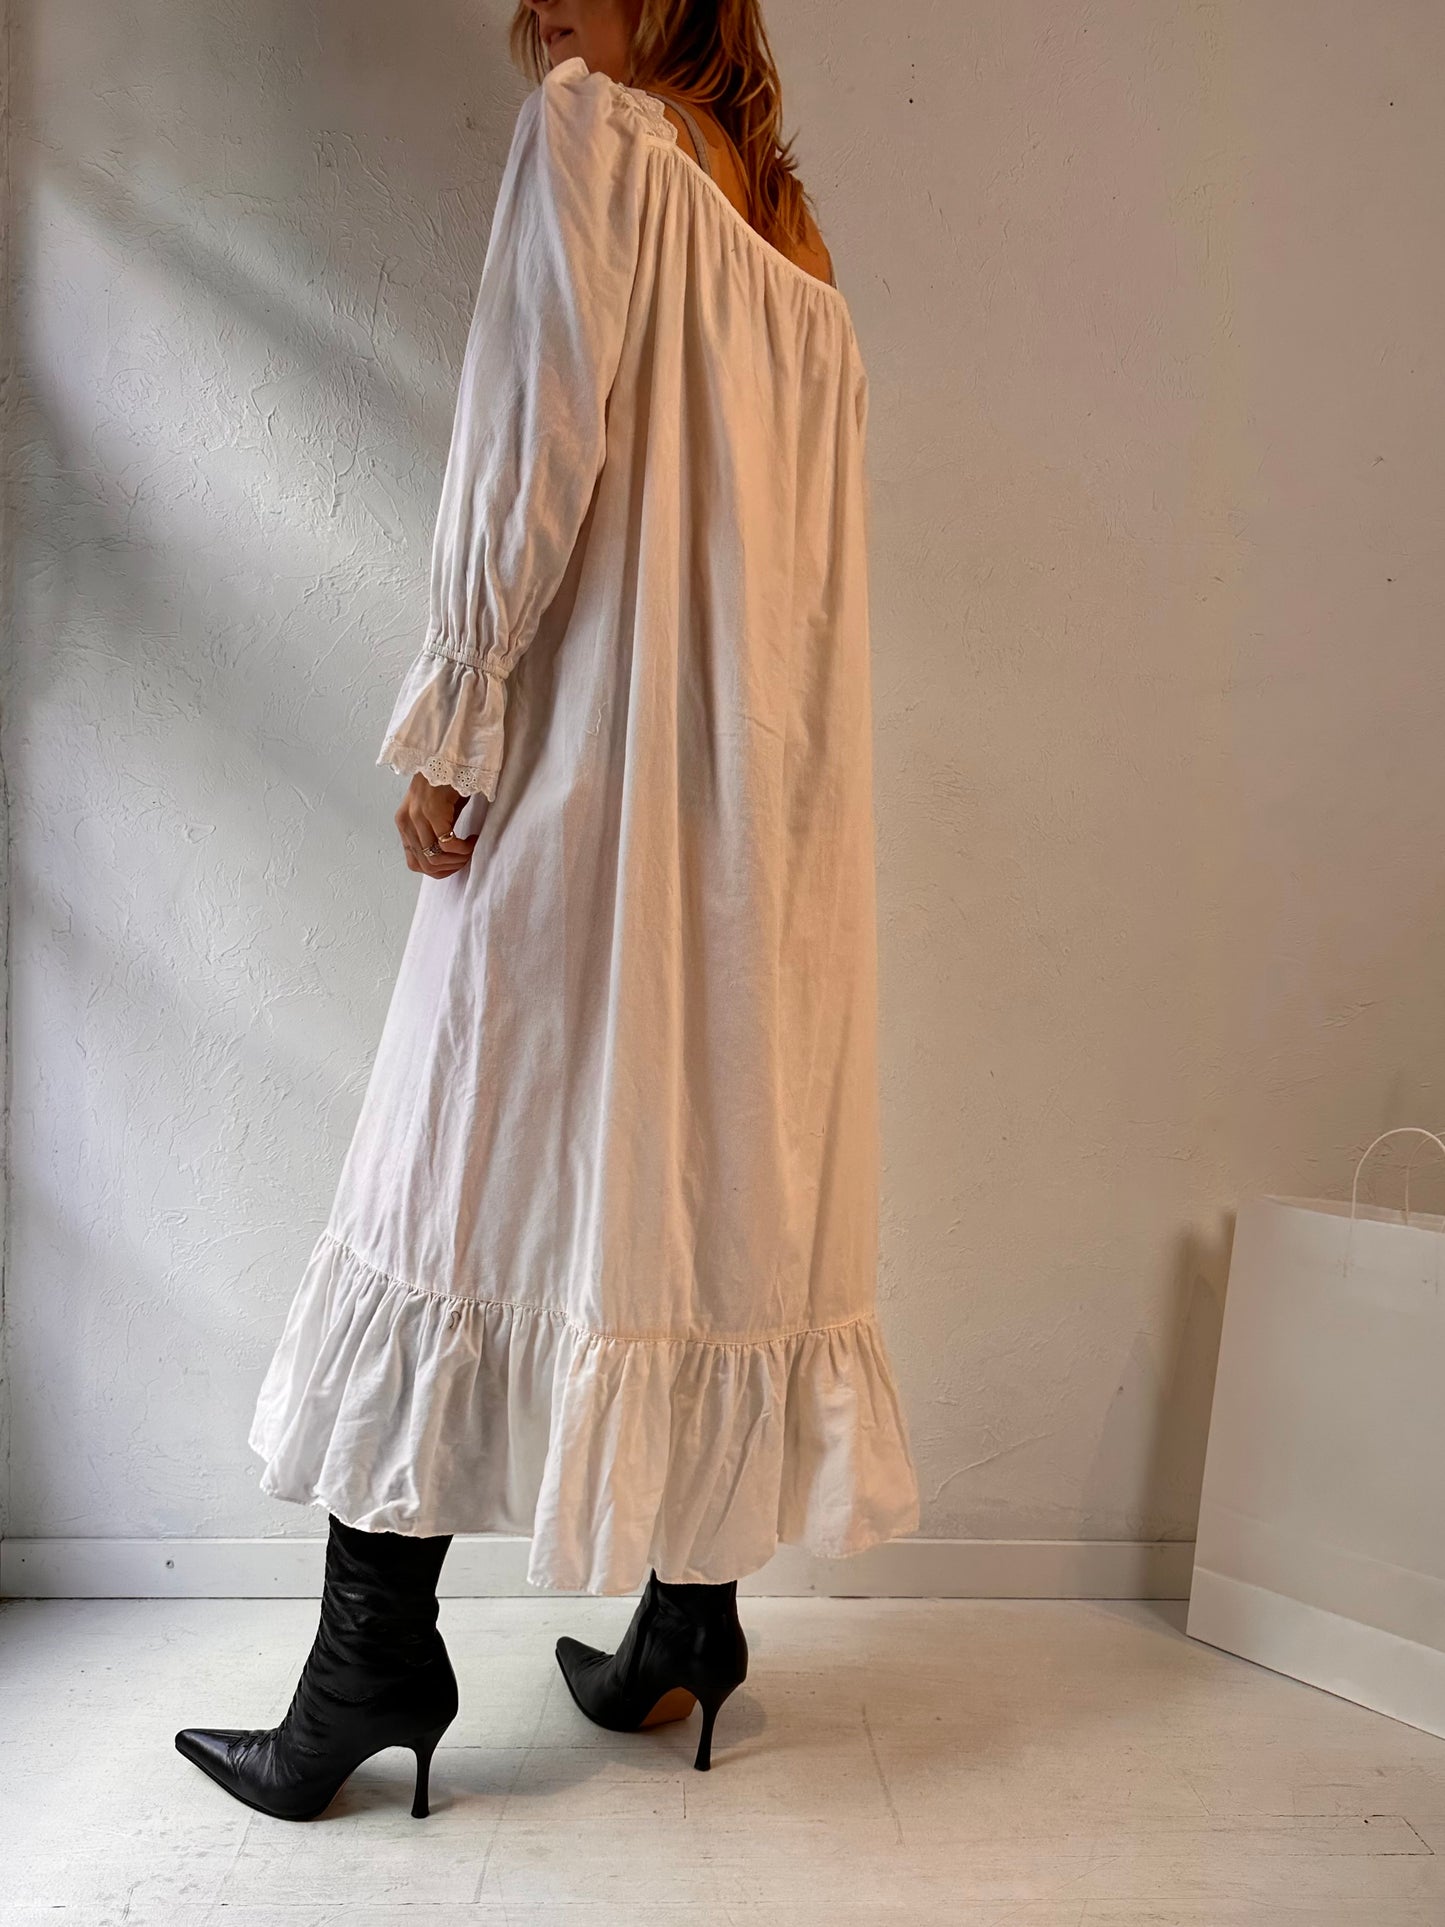 Y2k 'Victoria Secret' White Long Sleeve Cotton Dress / Small